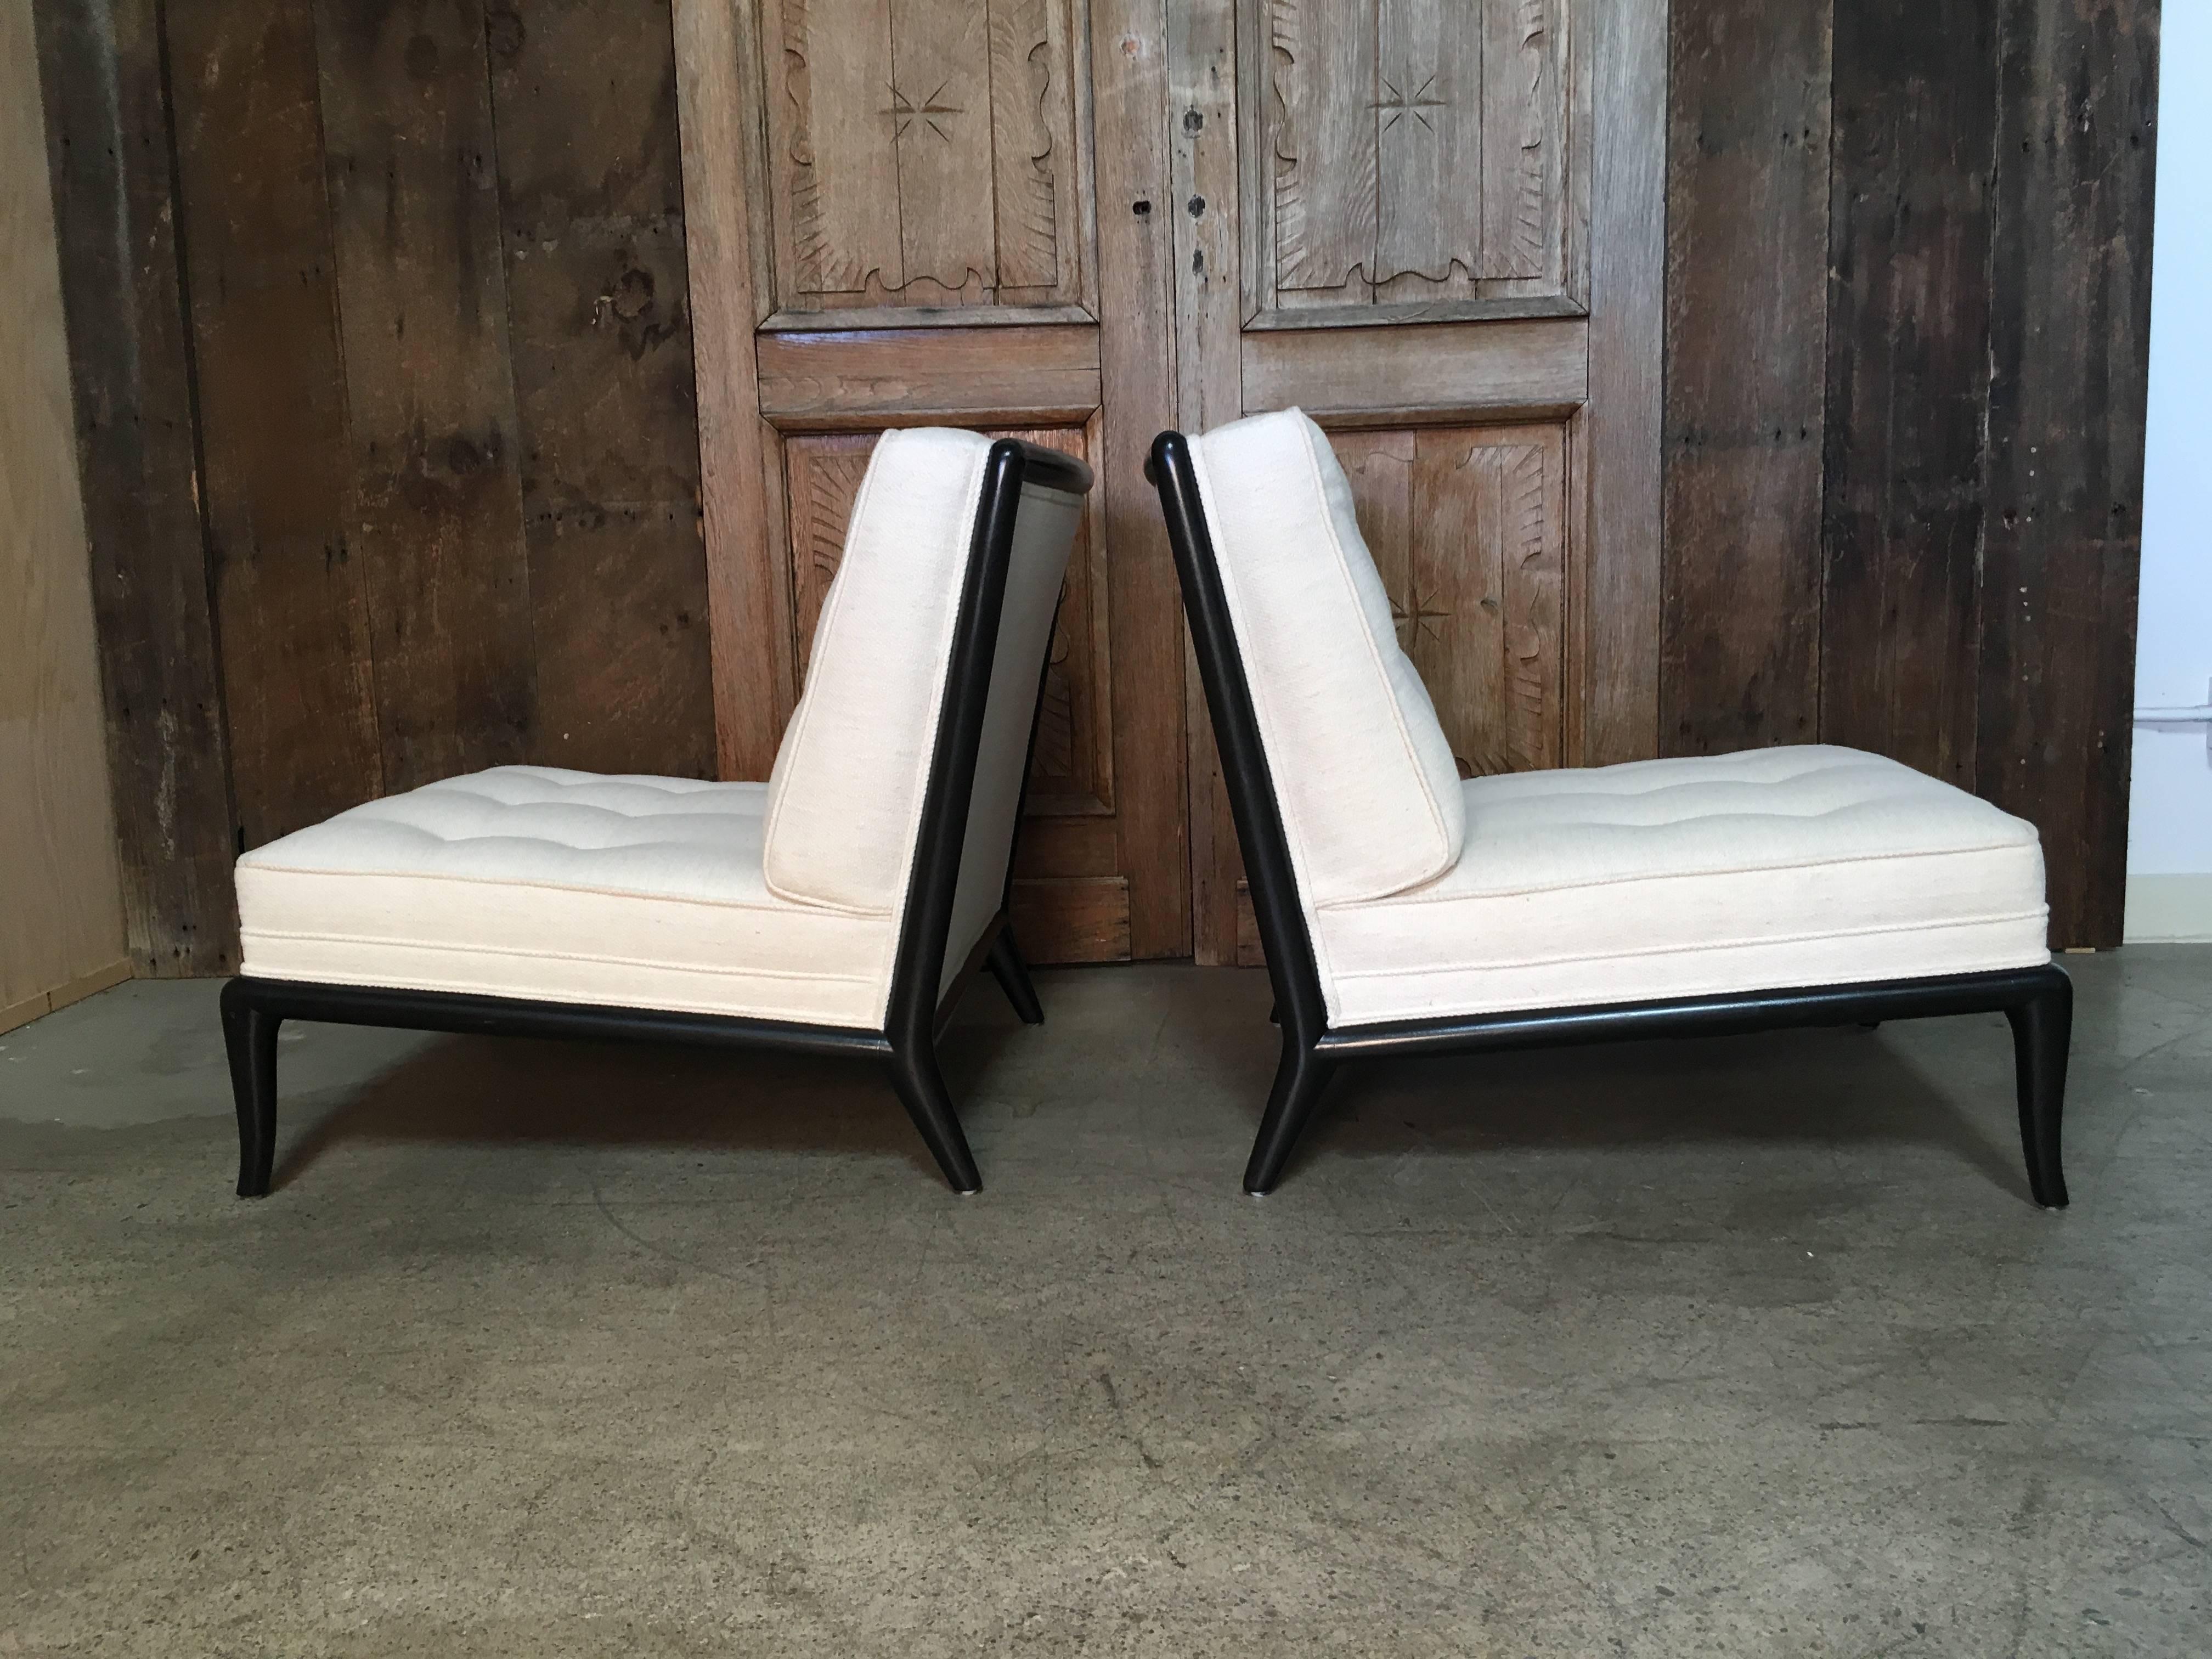 Pair of ebonized slipper chairs in the style of Robsjohn-Gibbings.